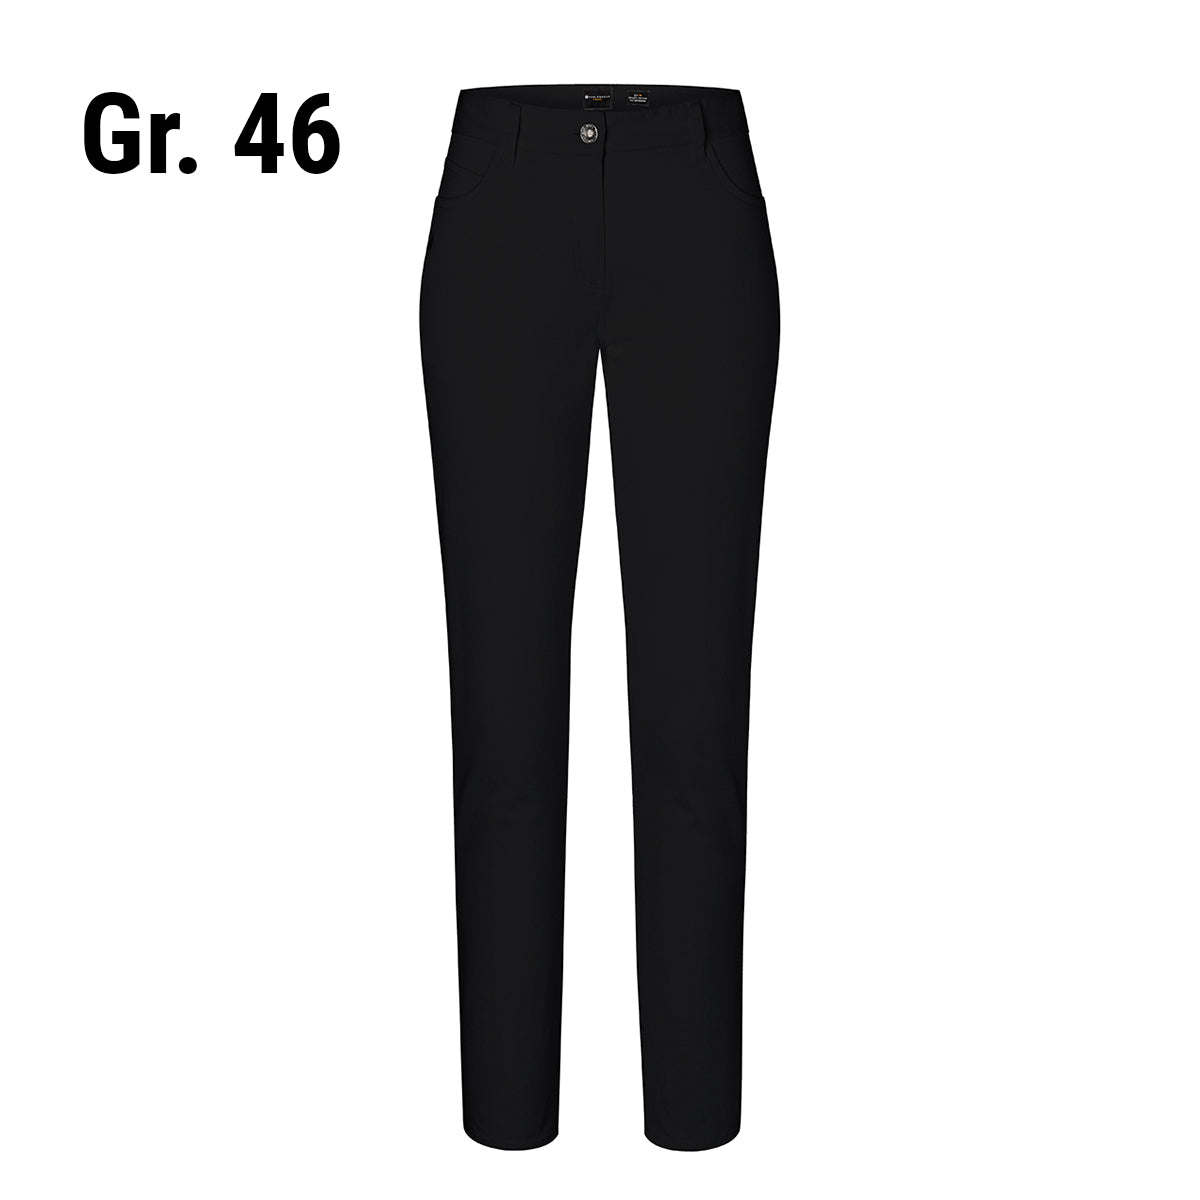 (6 stk.) Karlowsky - 5-lomme bukser til damer - Sort - Størrelse: 46